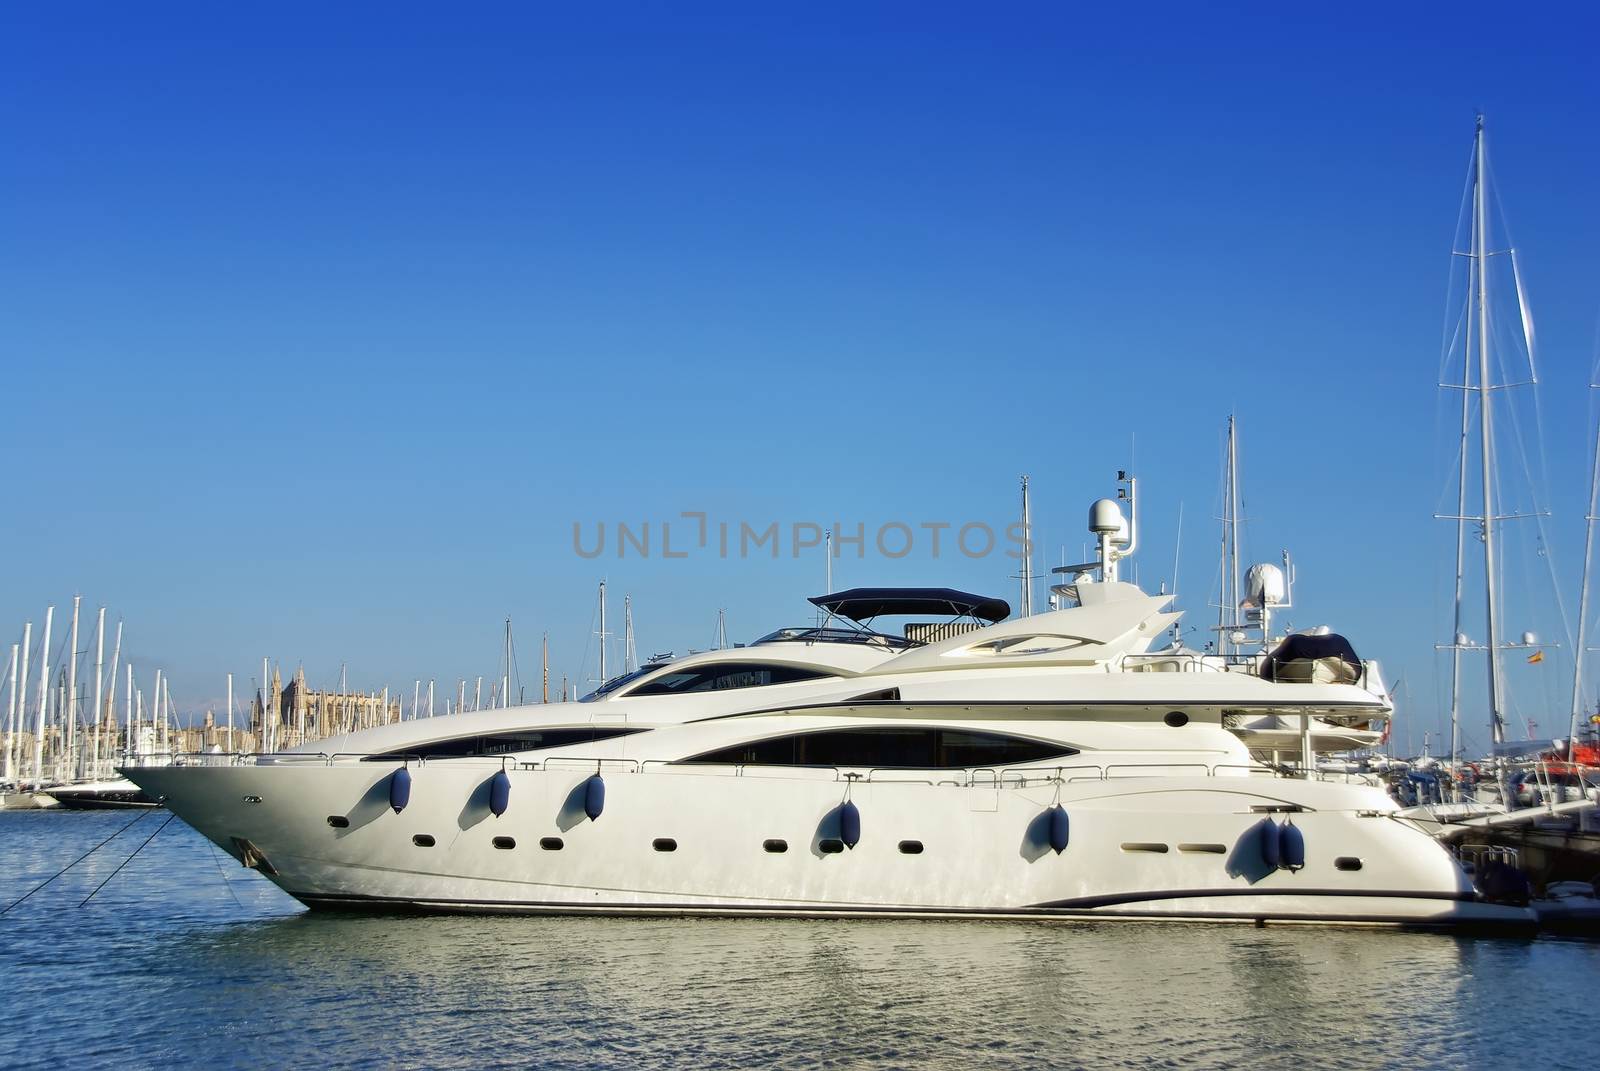 Luxury yacht in the Palma de Mallorca bay